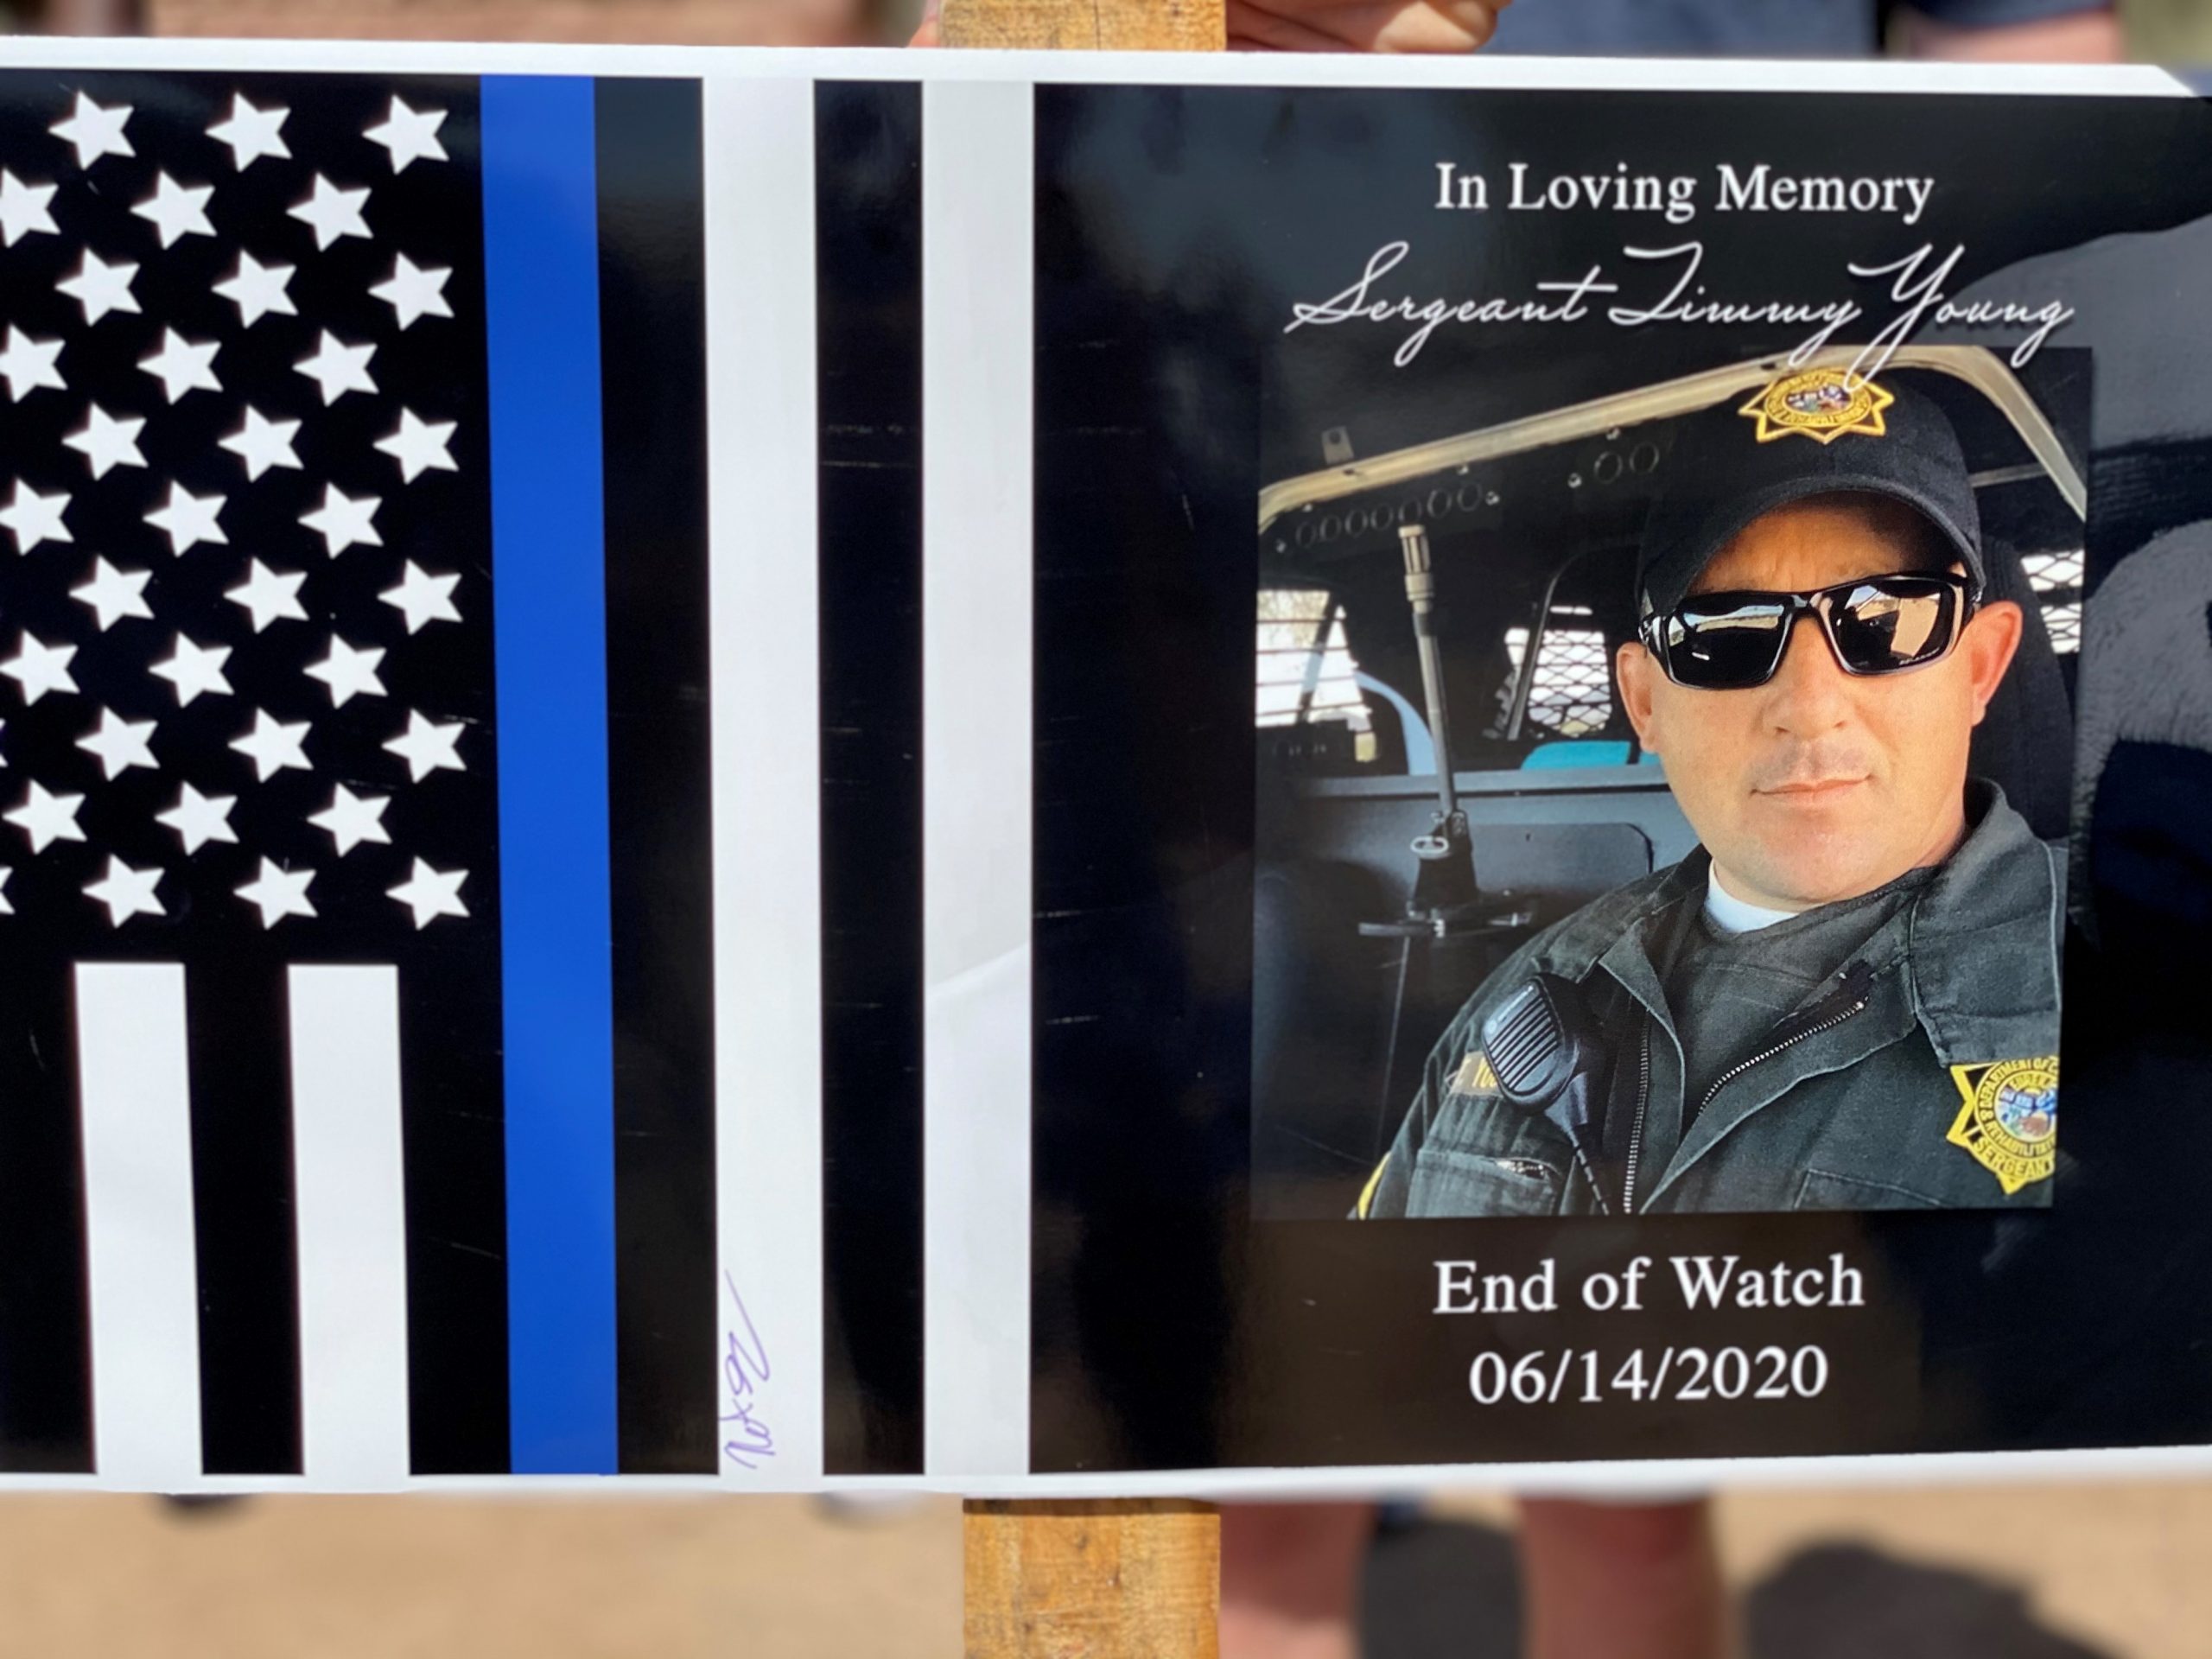 Photos honor fallen officers.